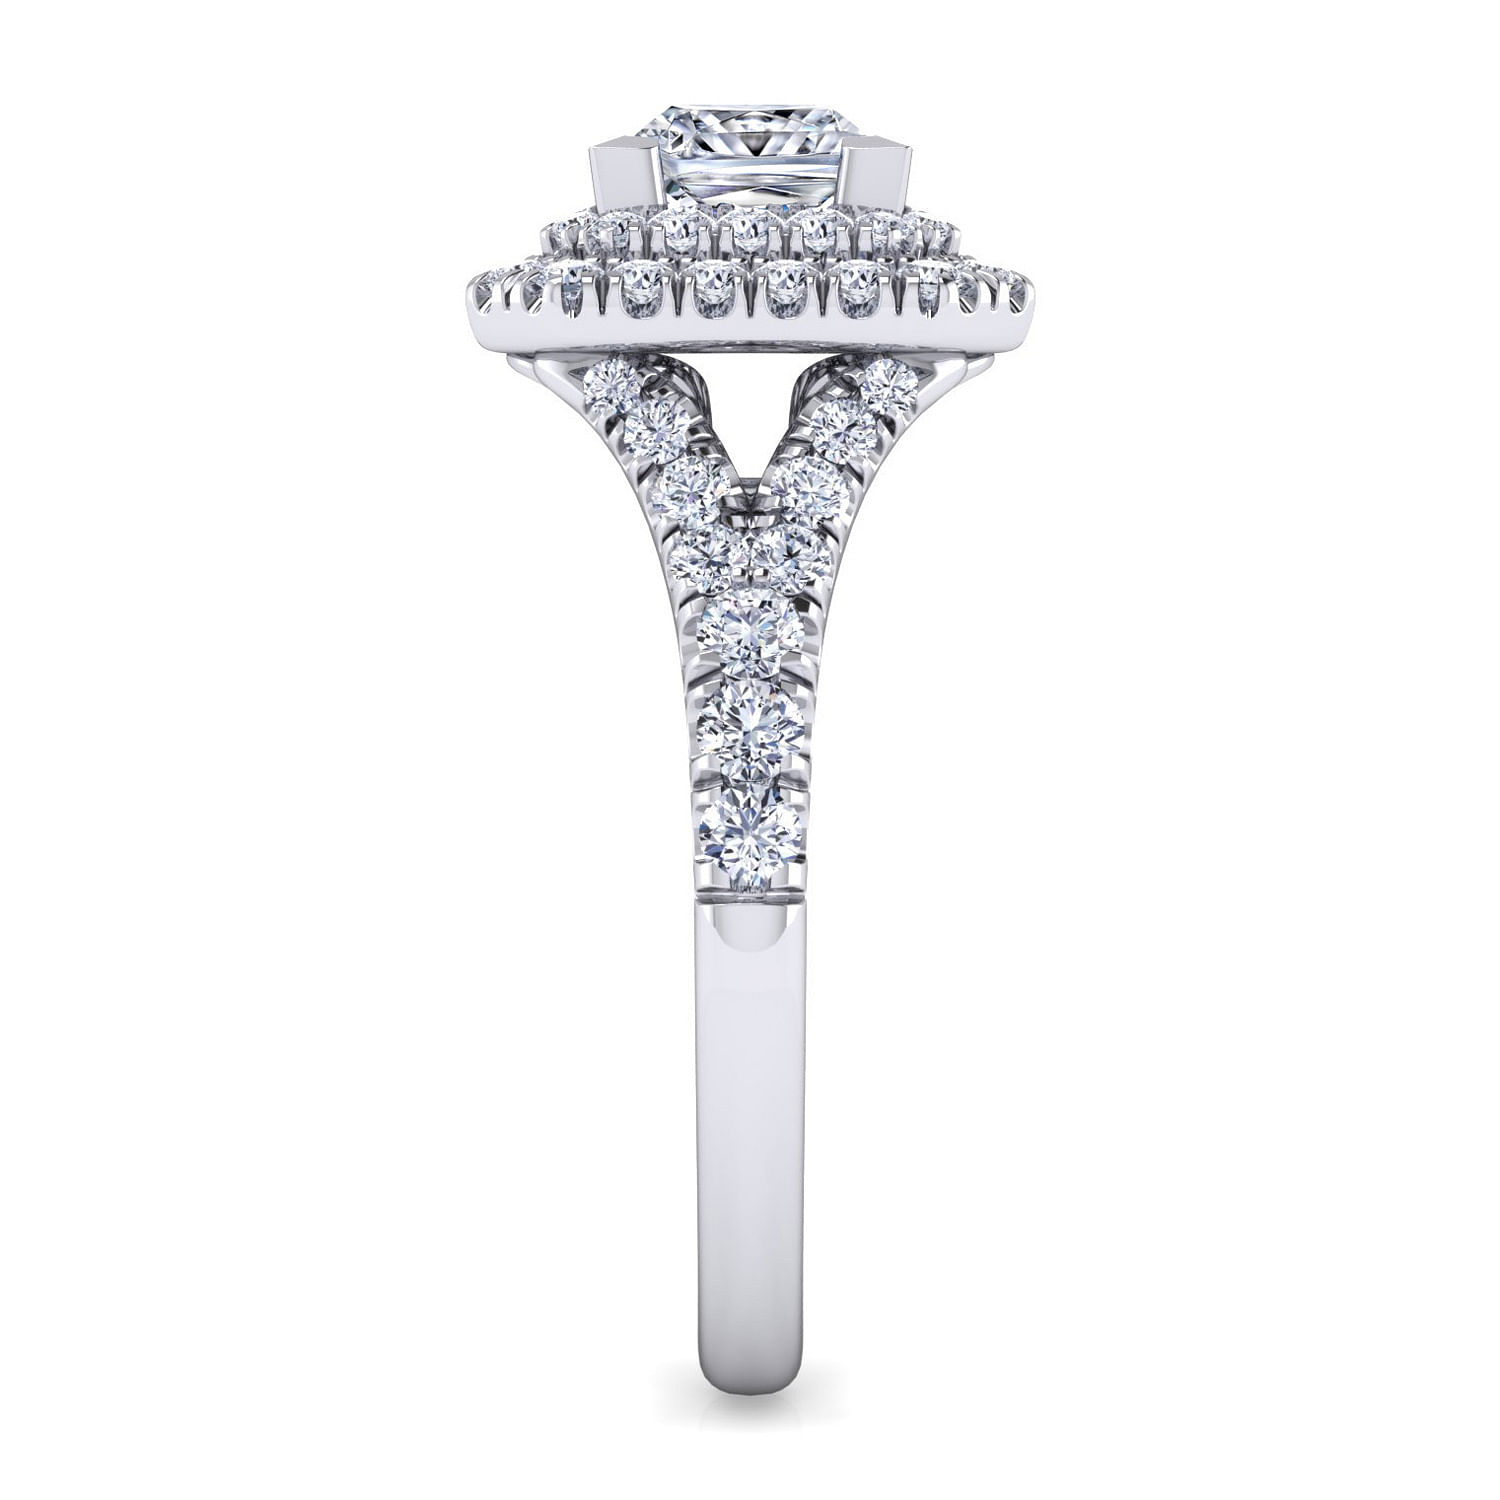 14K White Gold Princess Cut Double Halo Diamond Engagement Ring